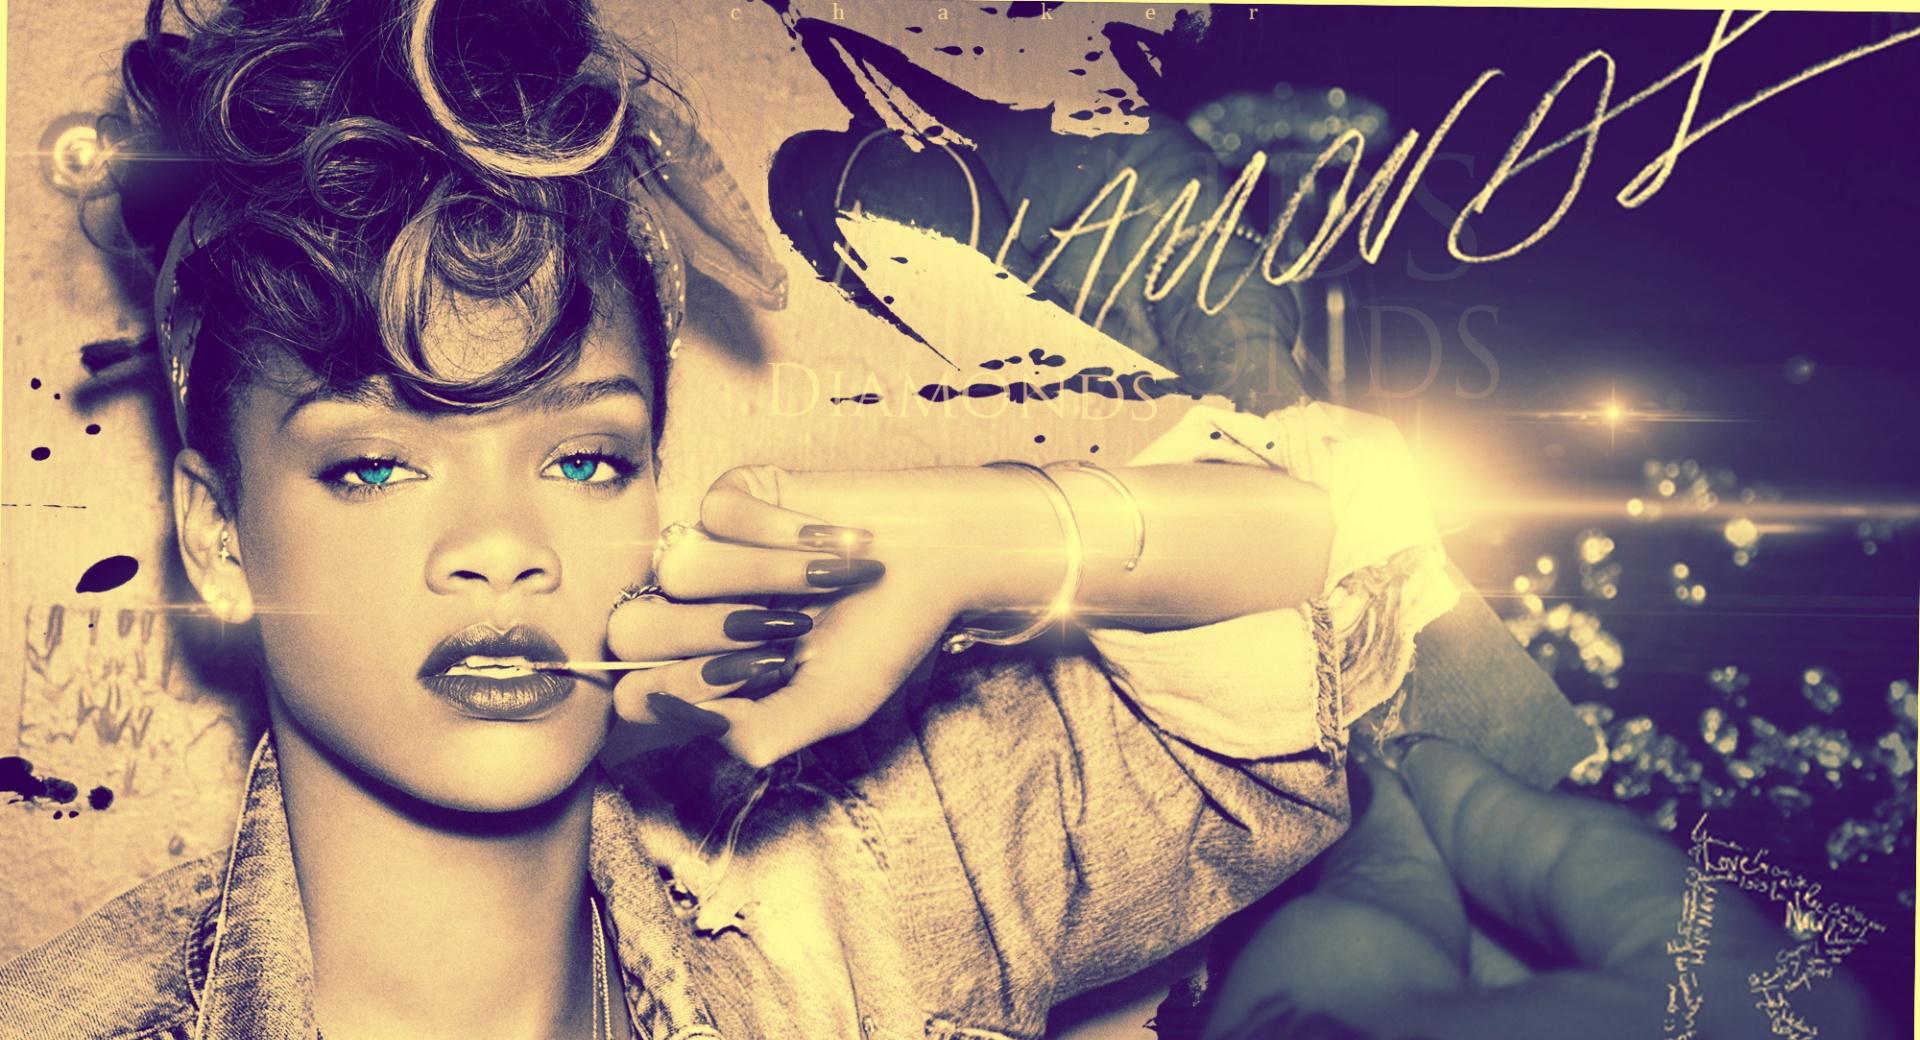 Rihanna-Diamonds at 1024 x 1024 iPad size wallpapers HD quality